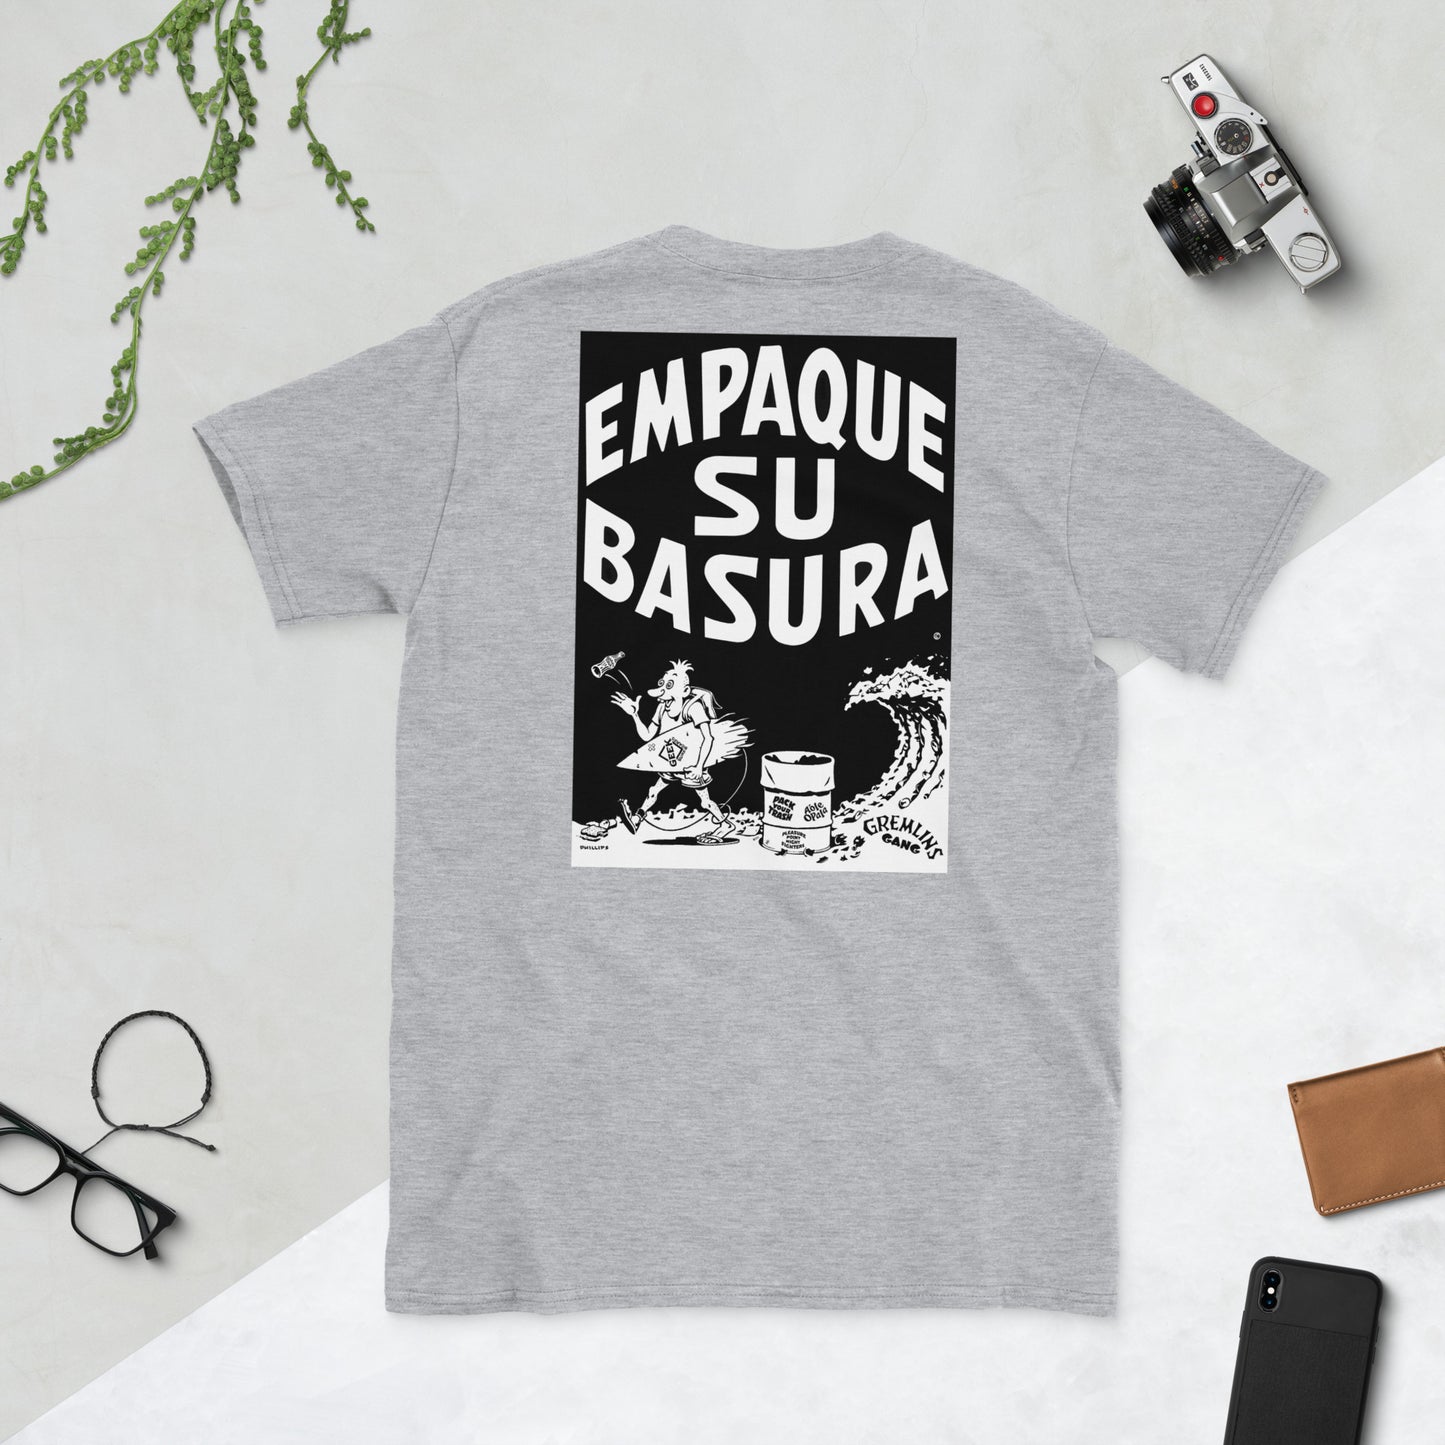 Pack Your Trash - Empaque Su Basura - Dark print on Light shirt - Short-Sleeve Unisex T-Shirt